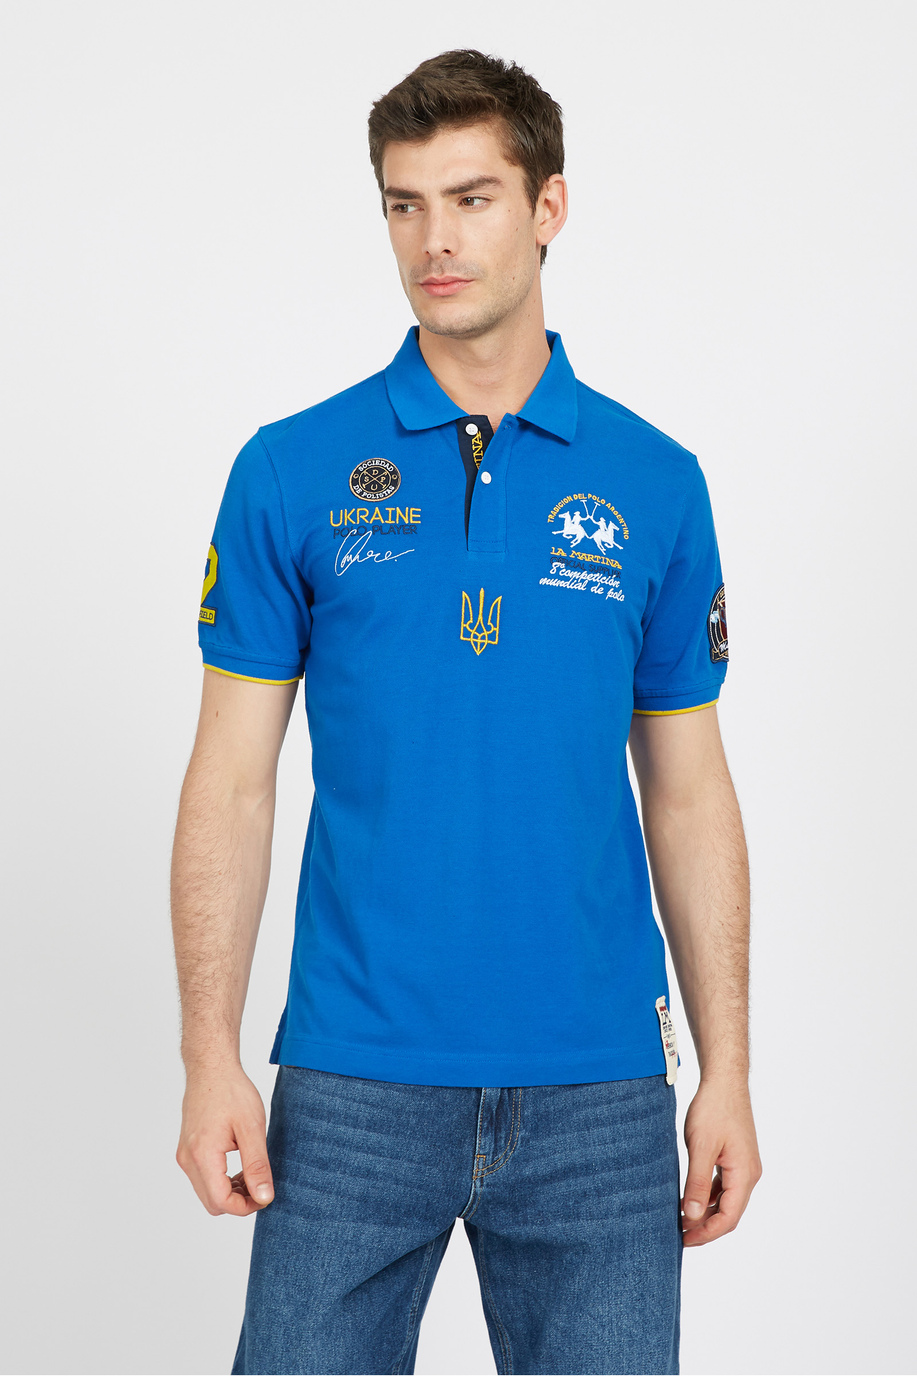 Regular fit 100% cotton short-sleeved polo shirt for men - Vincenzo - Replicas of major tournaments | La Martina - Official Online Shop